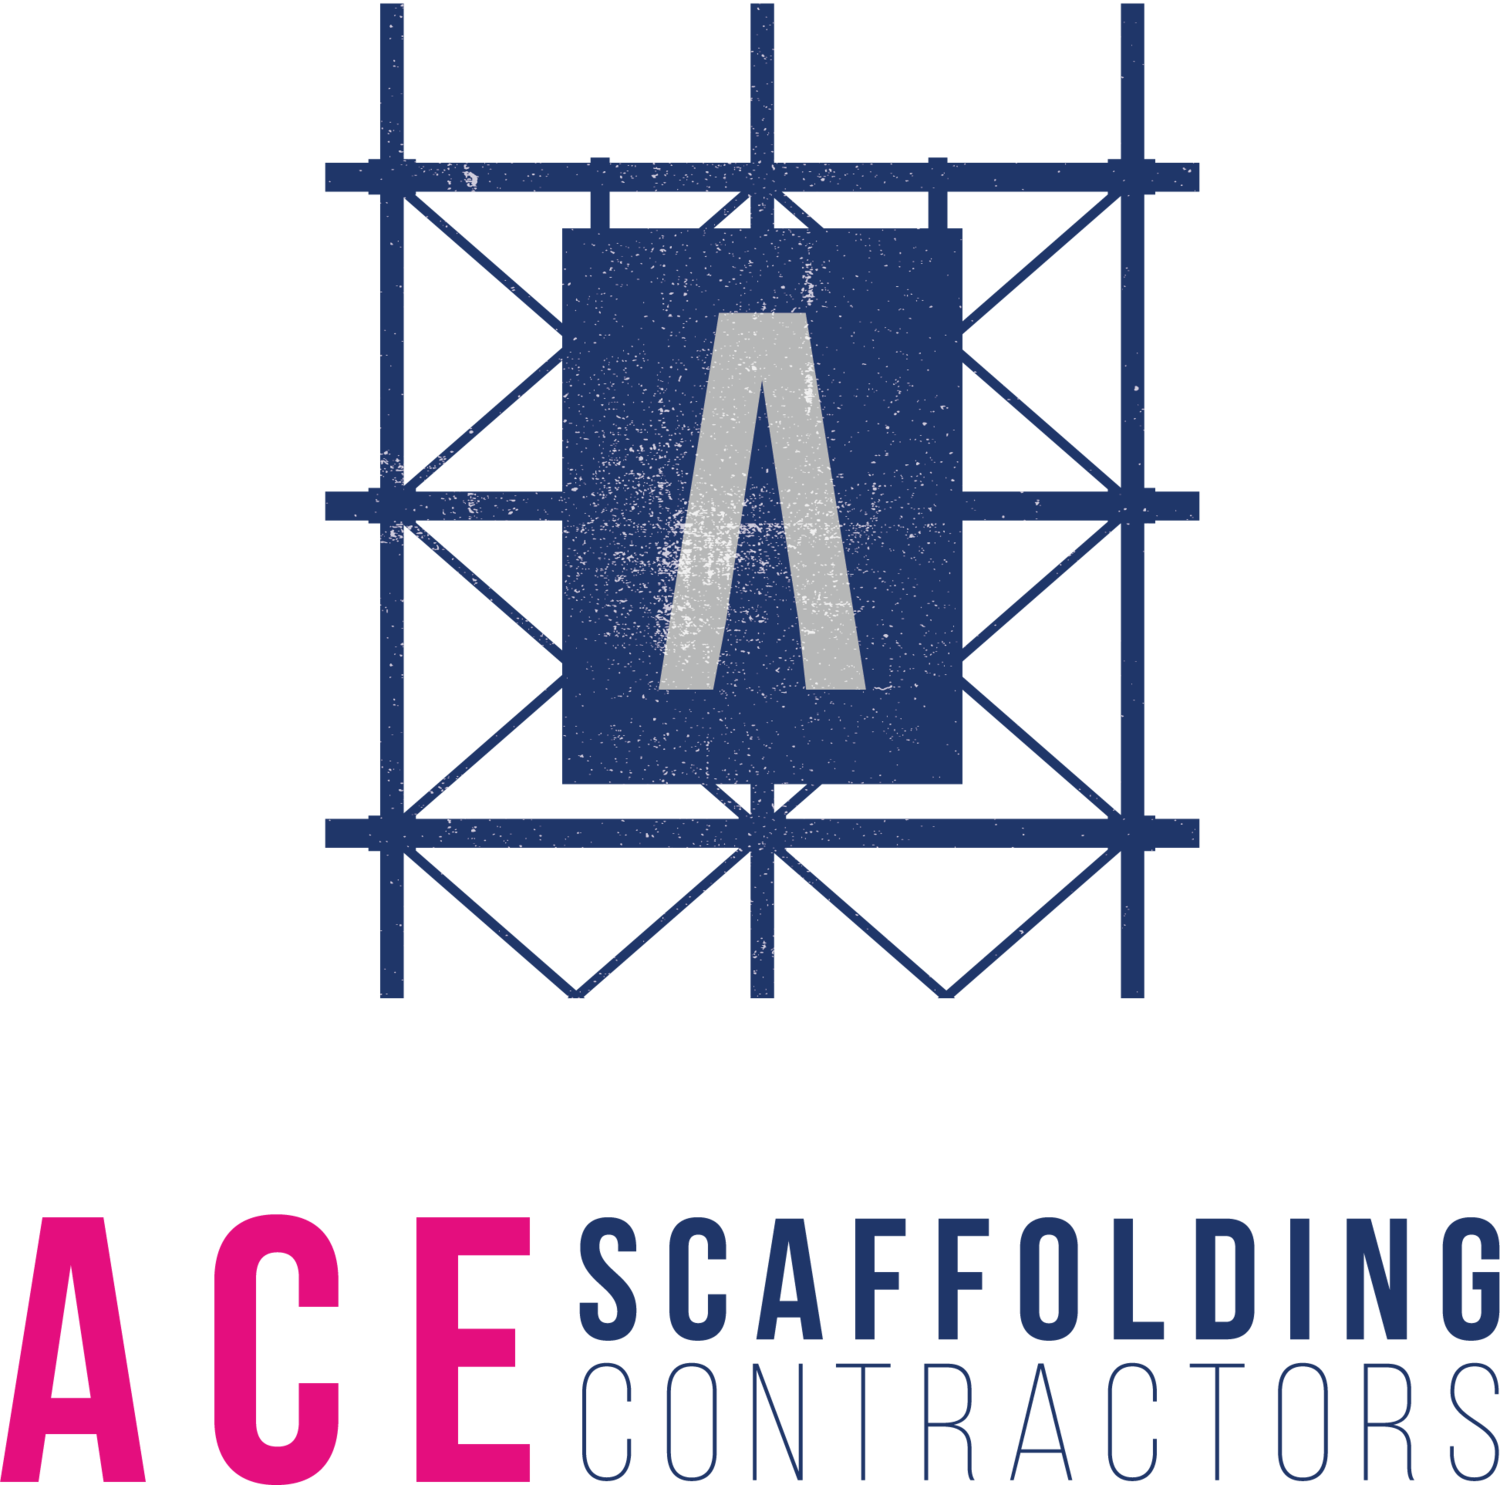 Ace Scaffolding Contractors